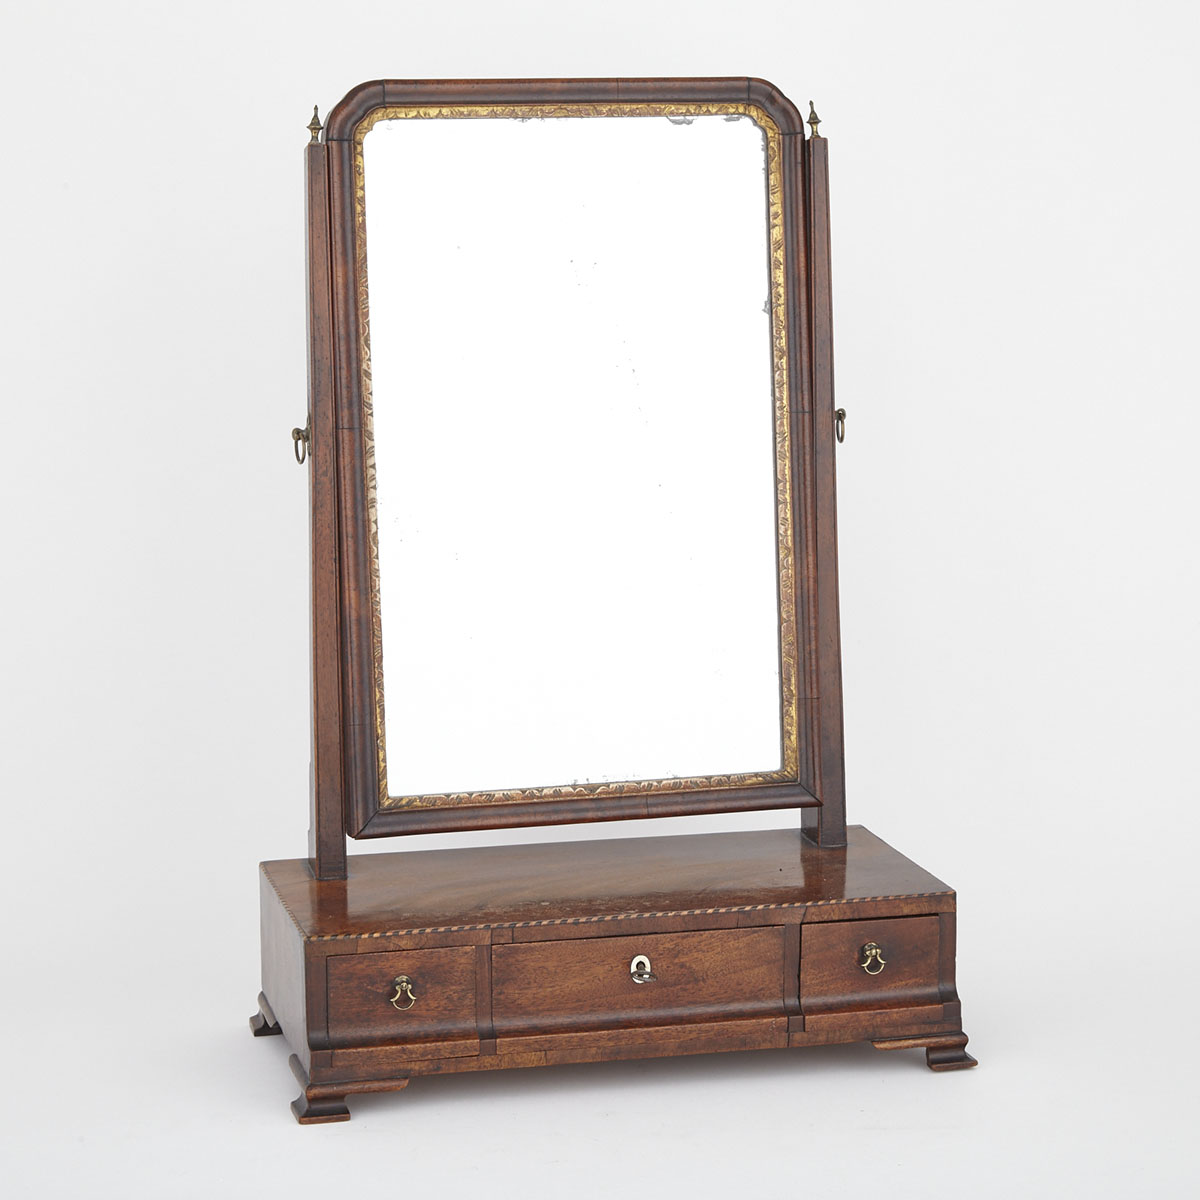 George III Mahogany Dressing Mirror, early 19th century